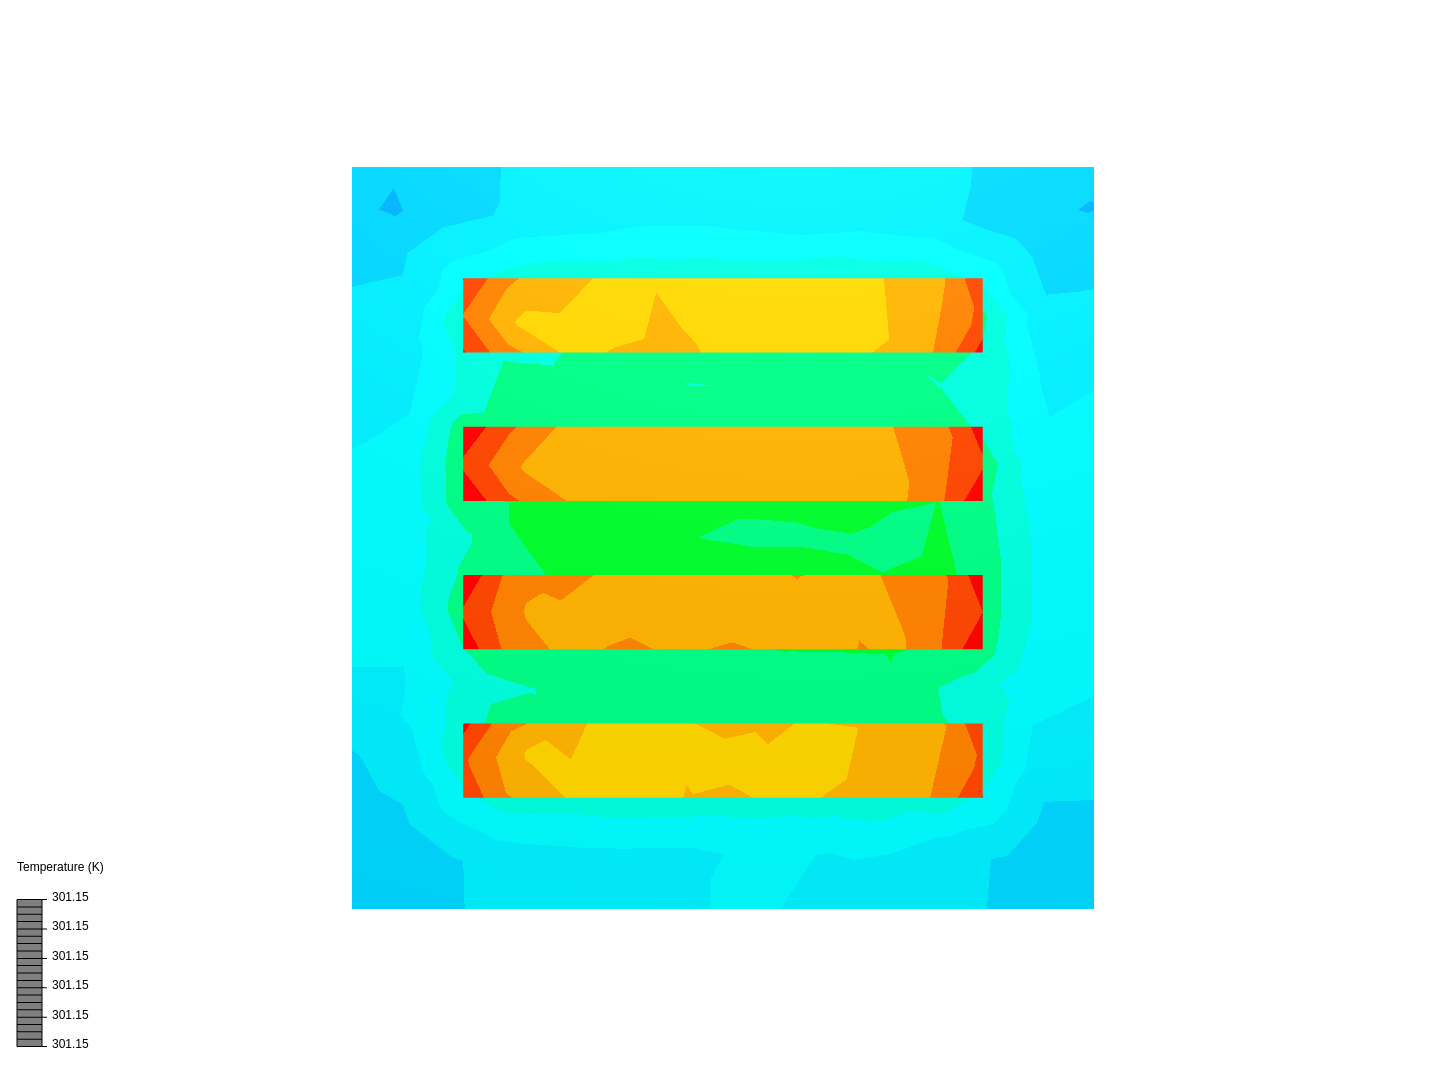 cube4 image